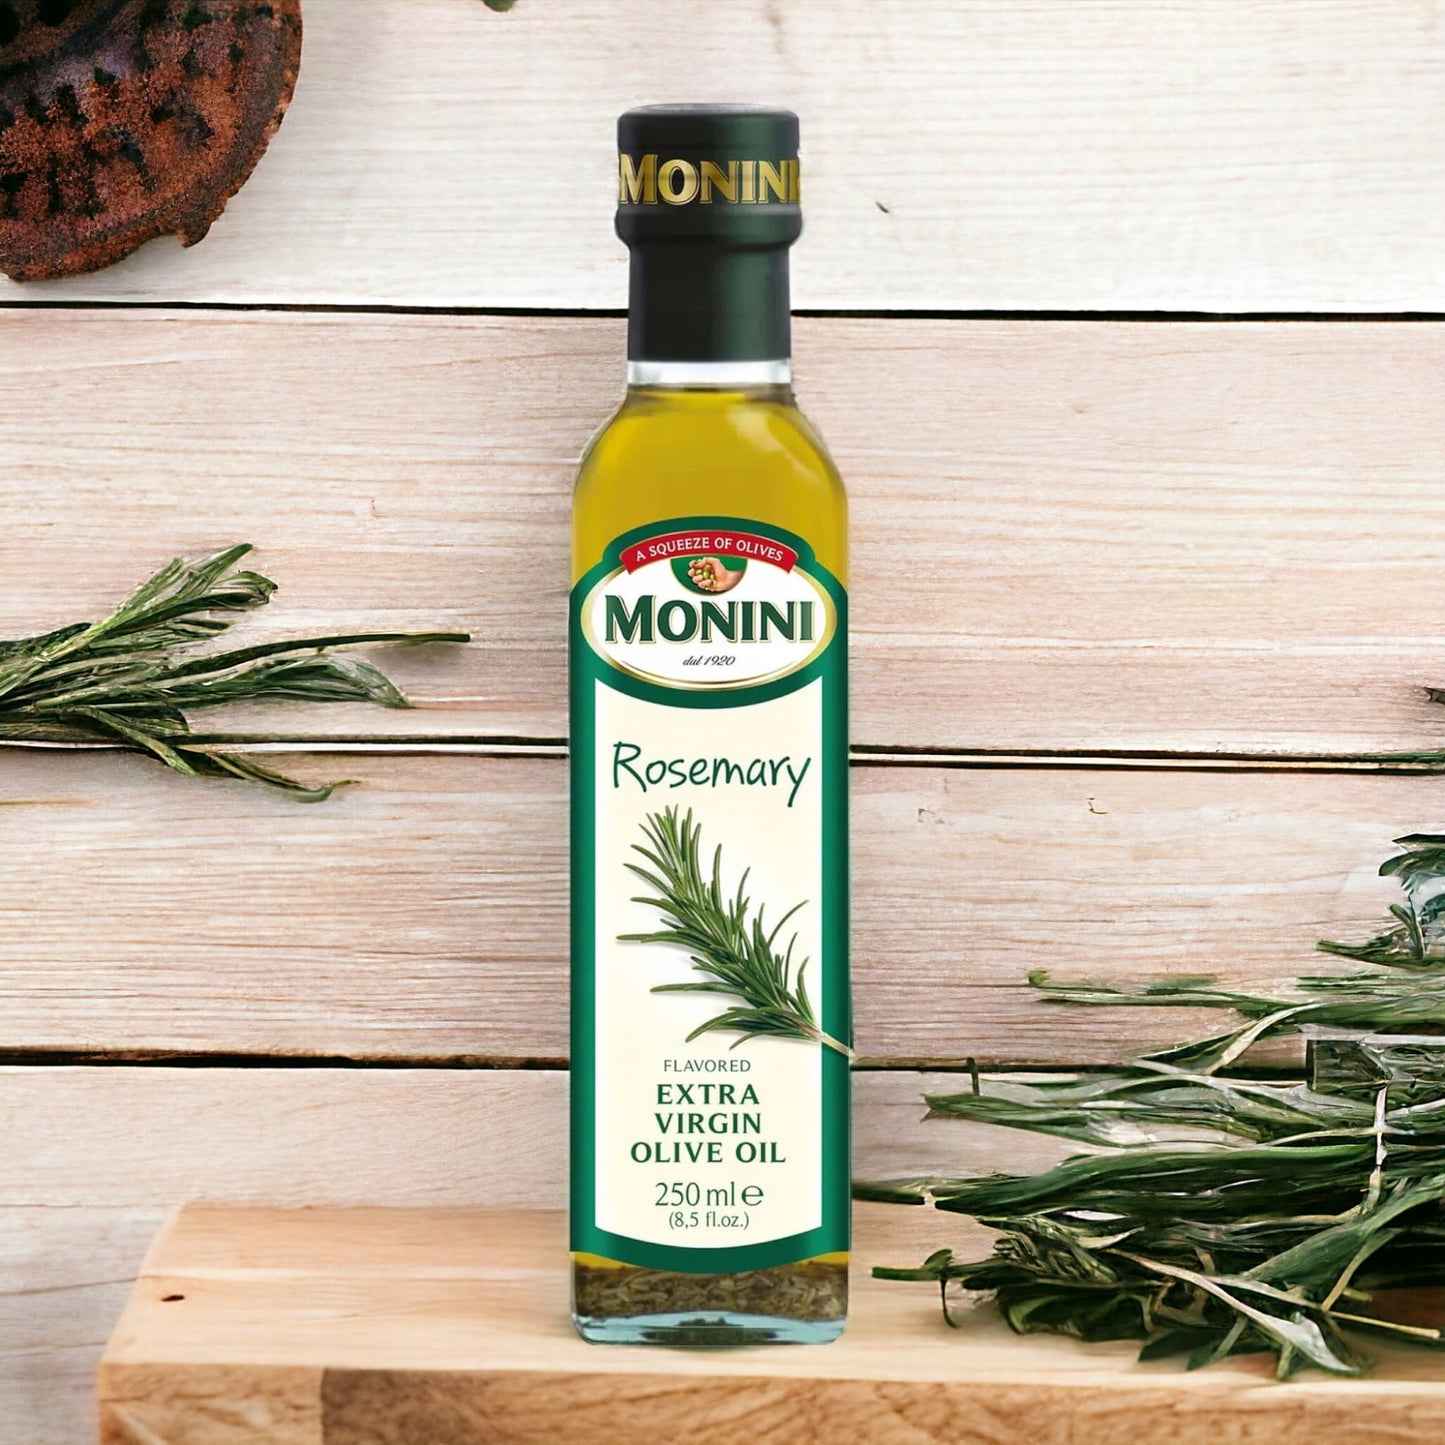 Monini Rosemary Flavored Extra Virgin Olive Oil 250ml - Marisa's Shopping Network 